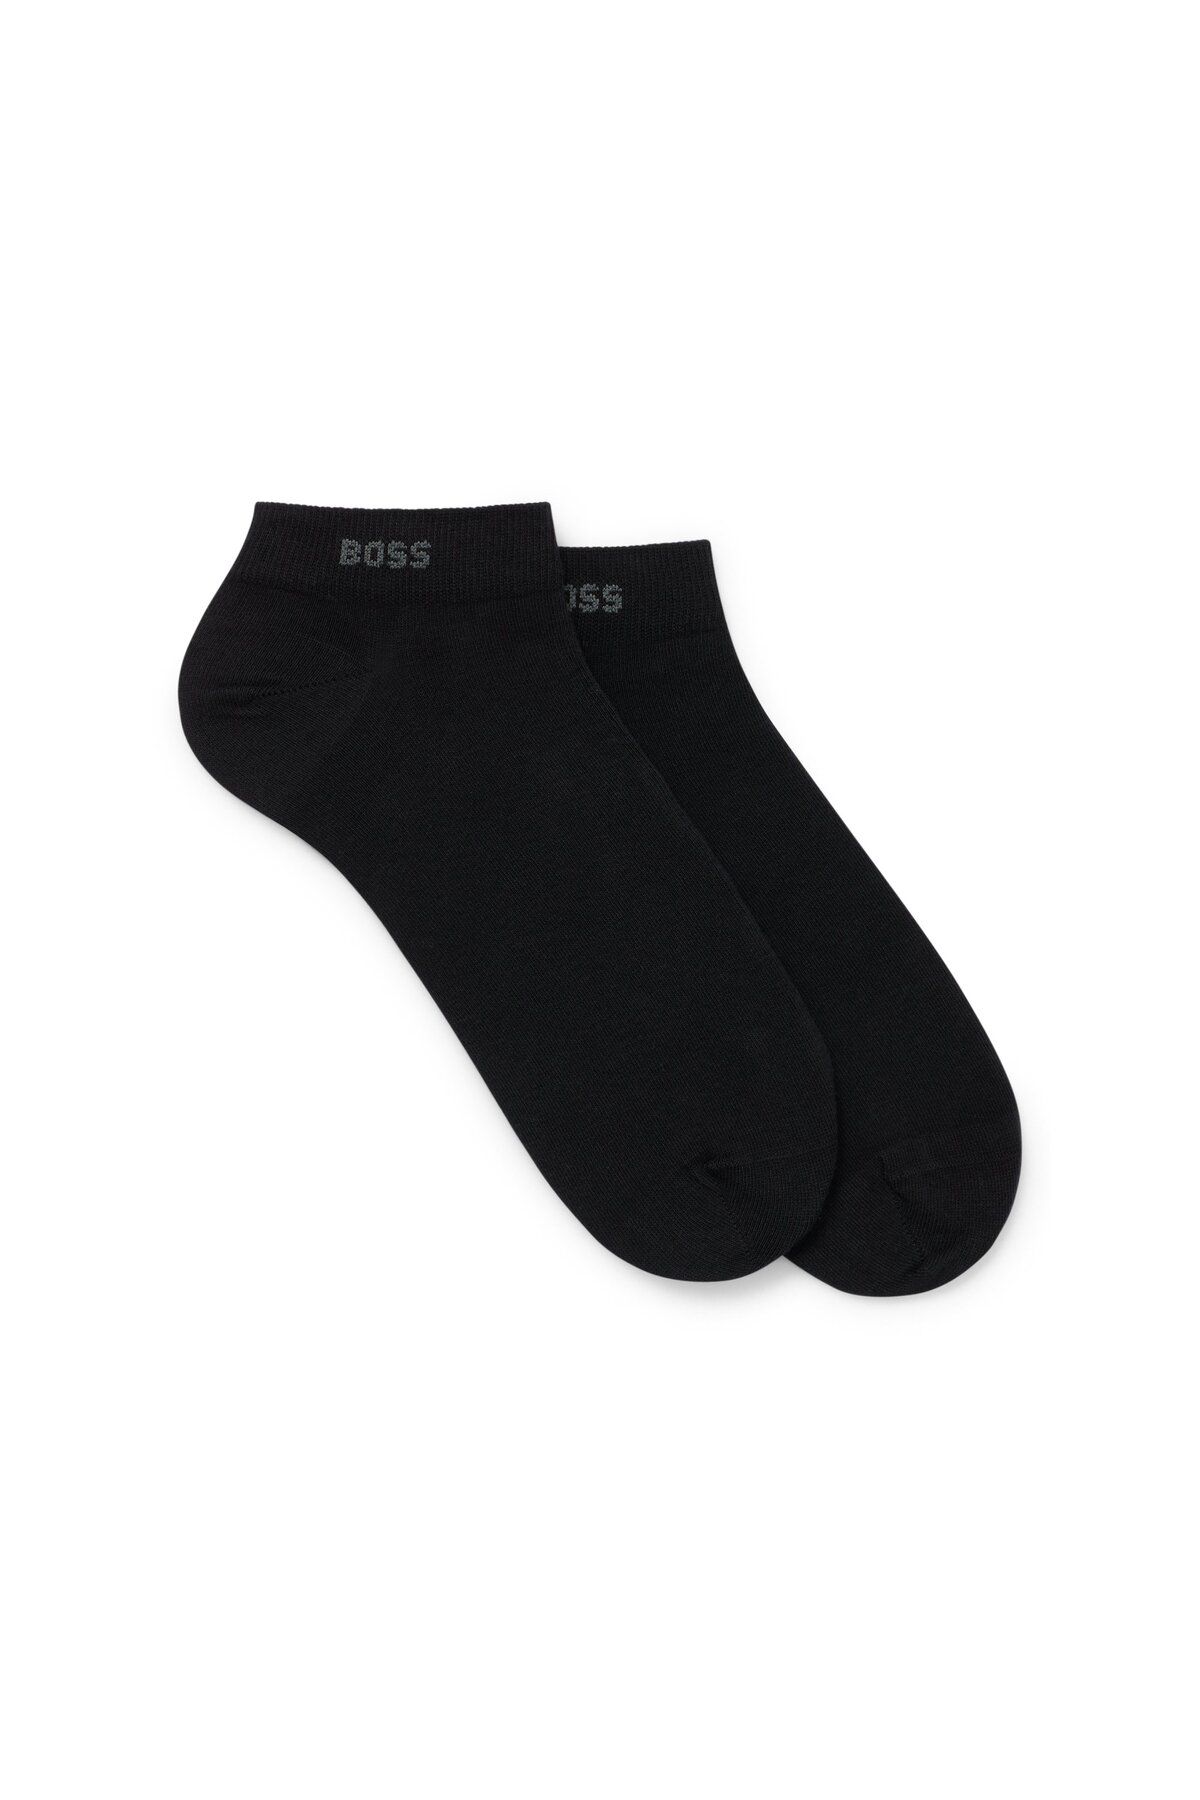 BOSS İkili Pakette Esnek Kumaştan Soket Çorap